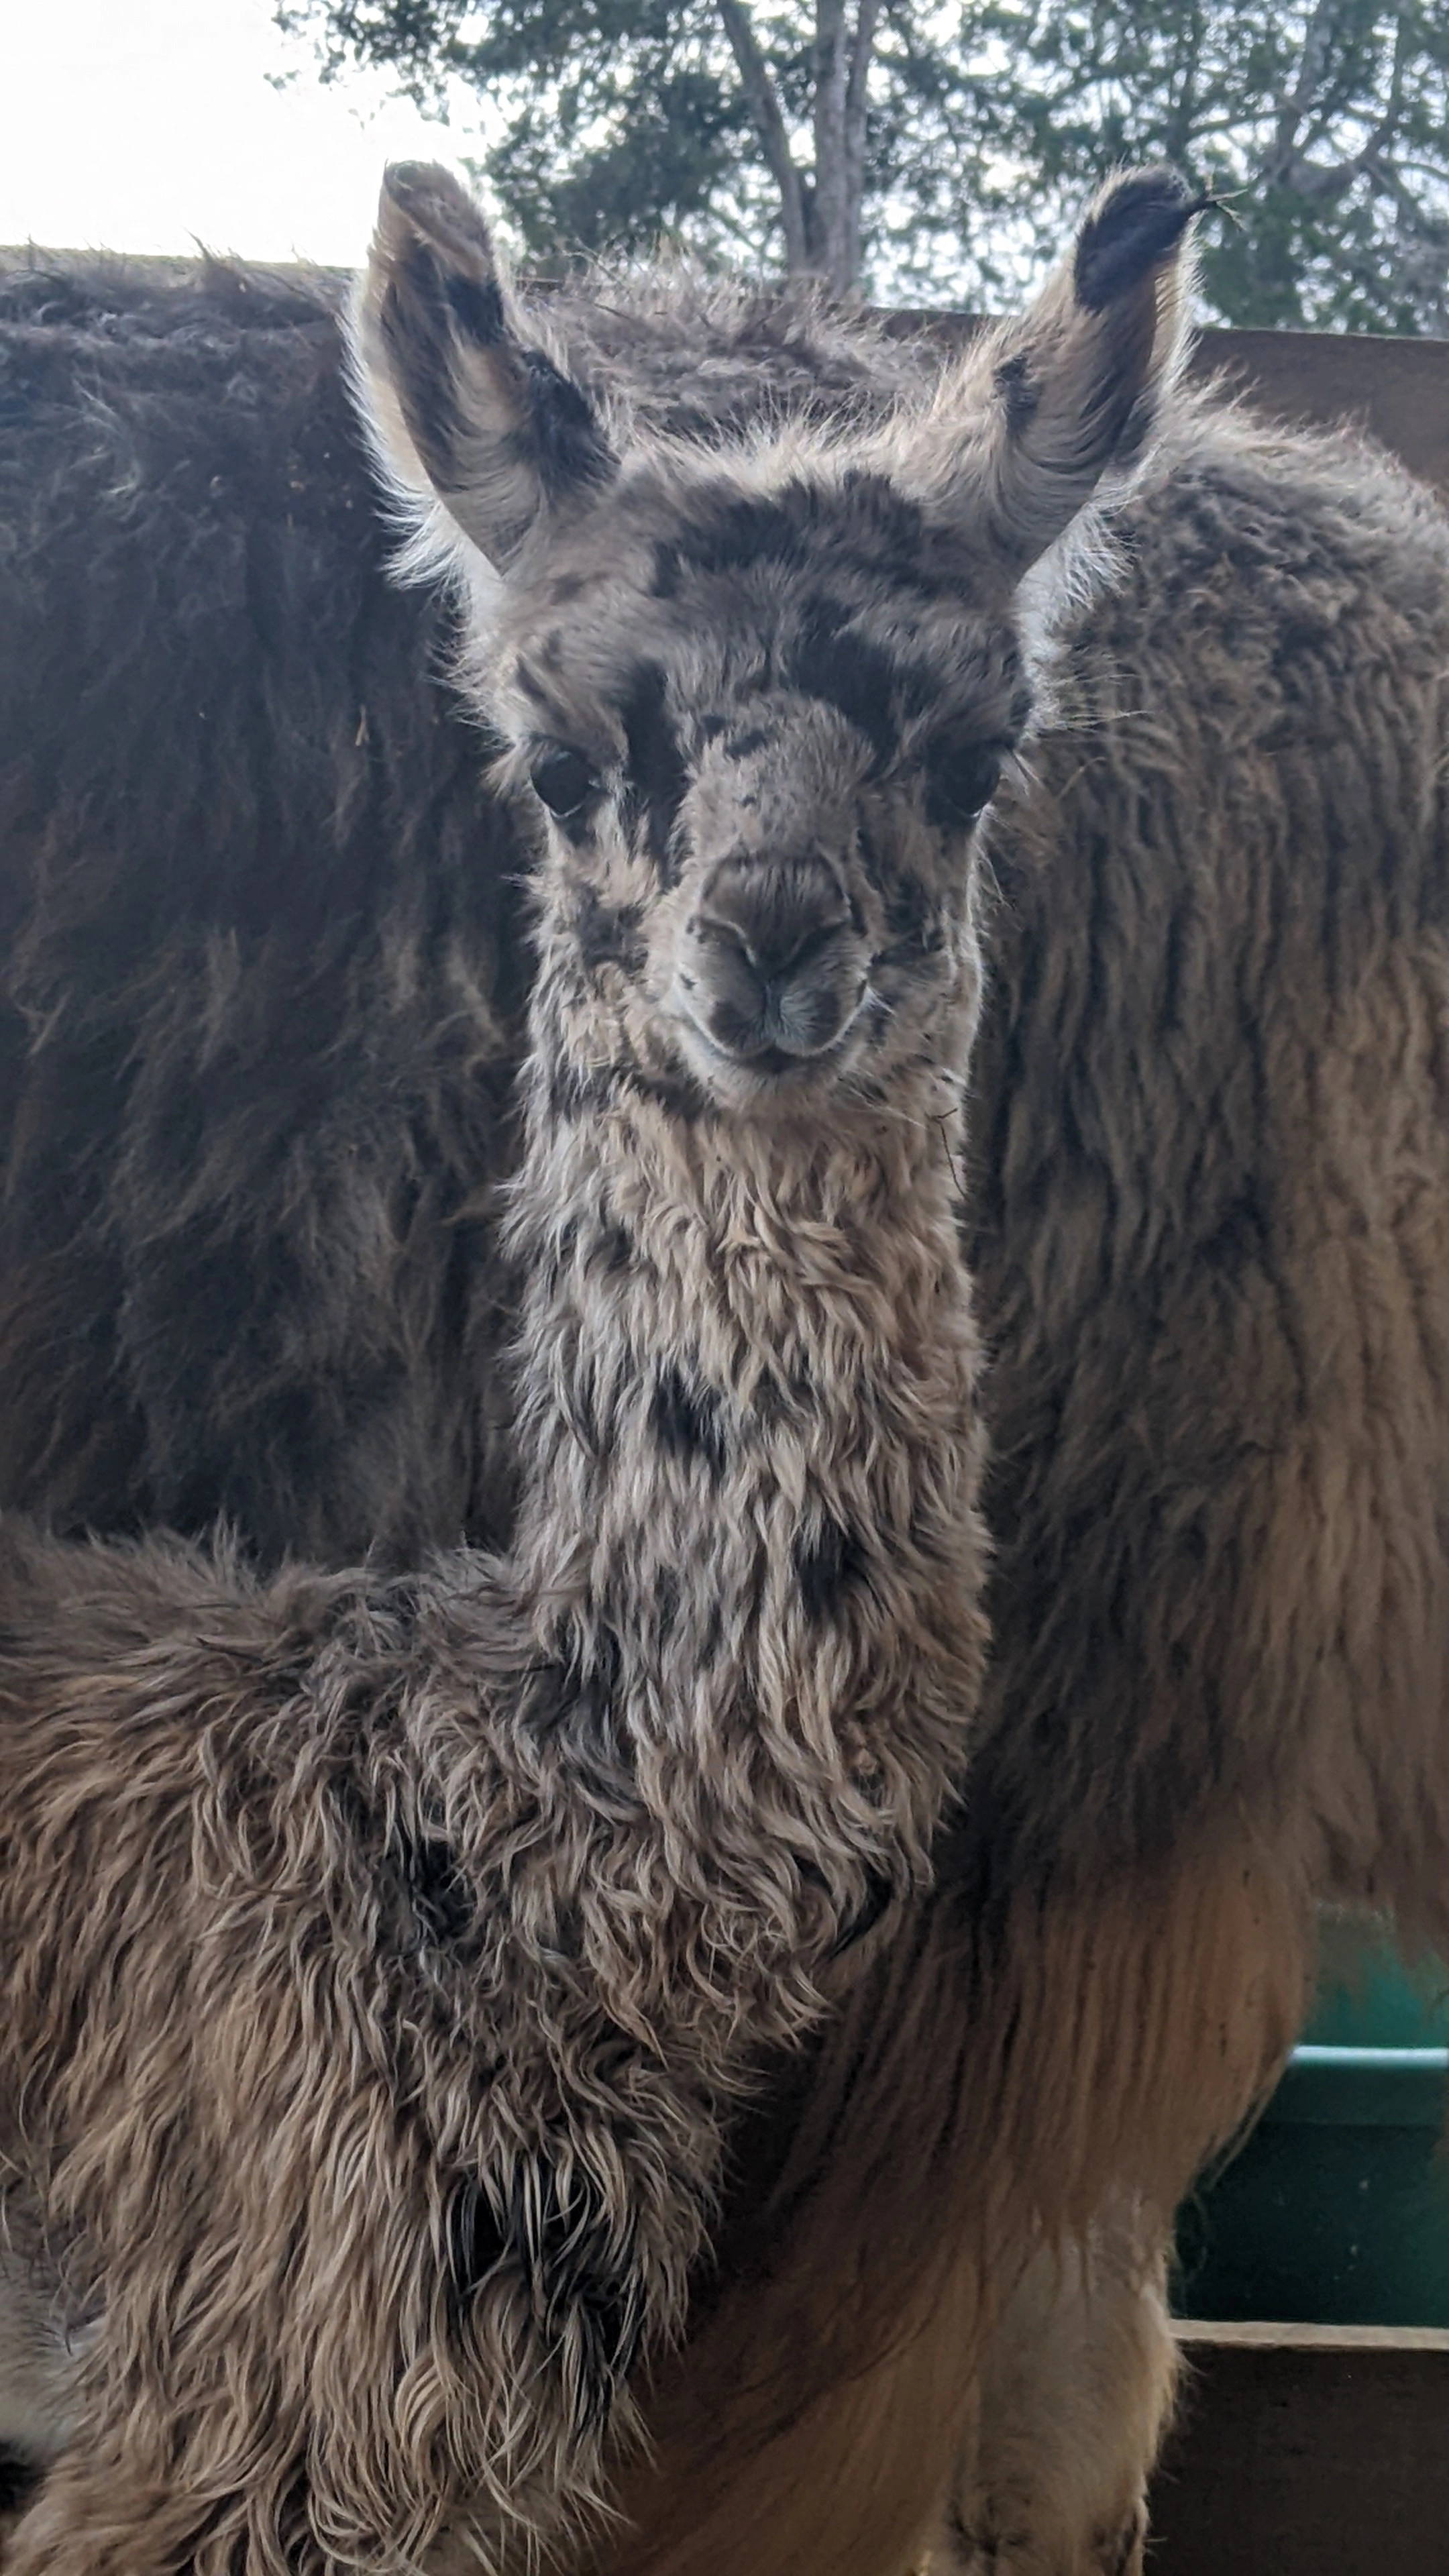 An image of a newborn llama named Fitz